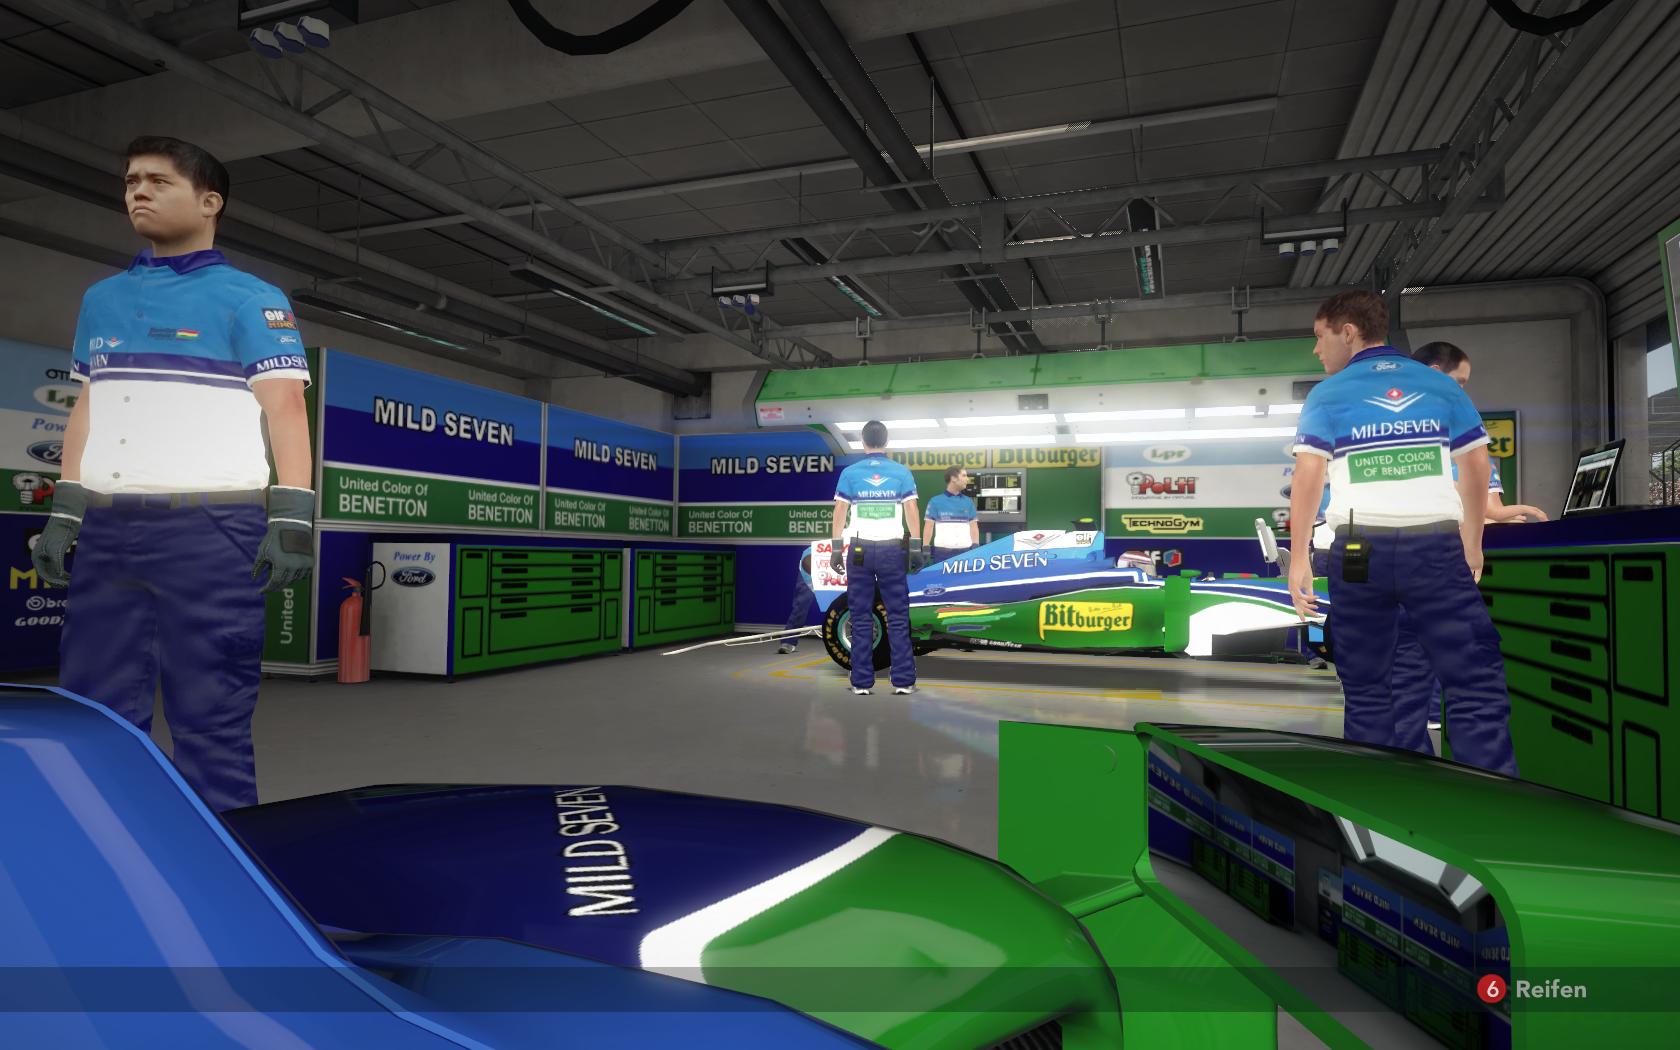 1994-Benetton-garage.jpg